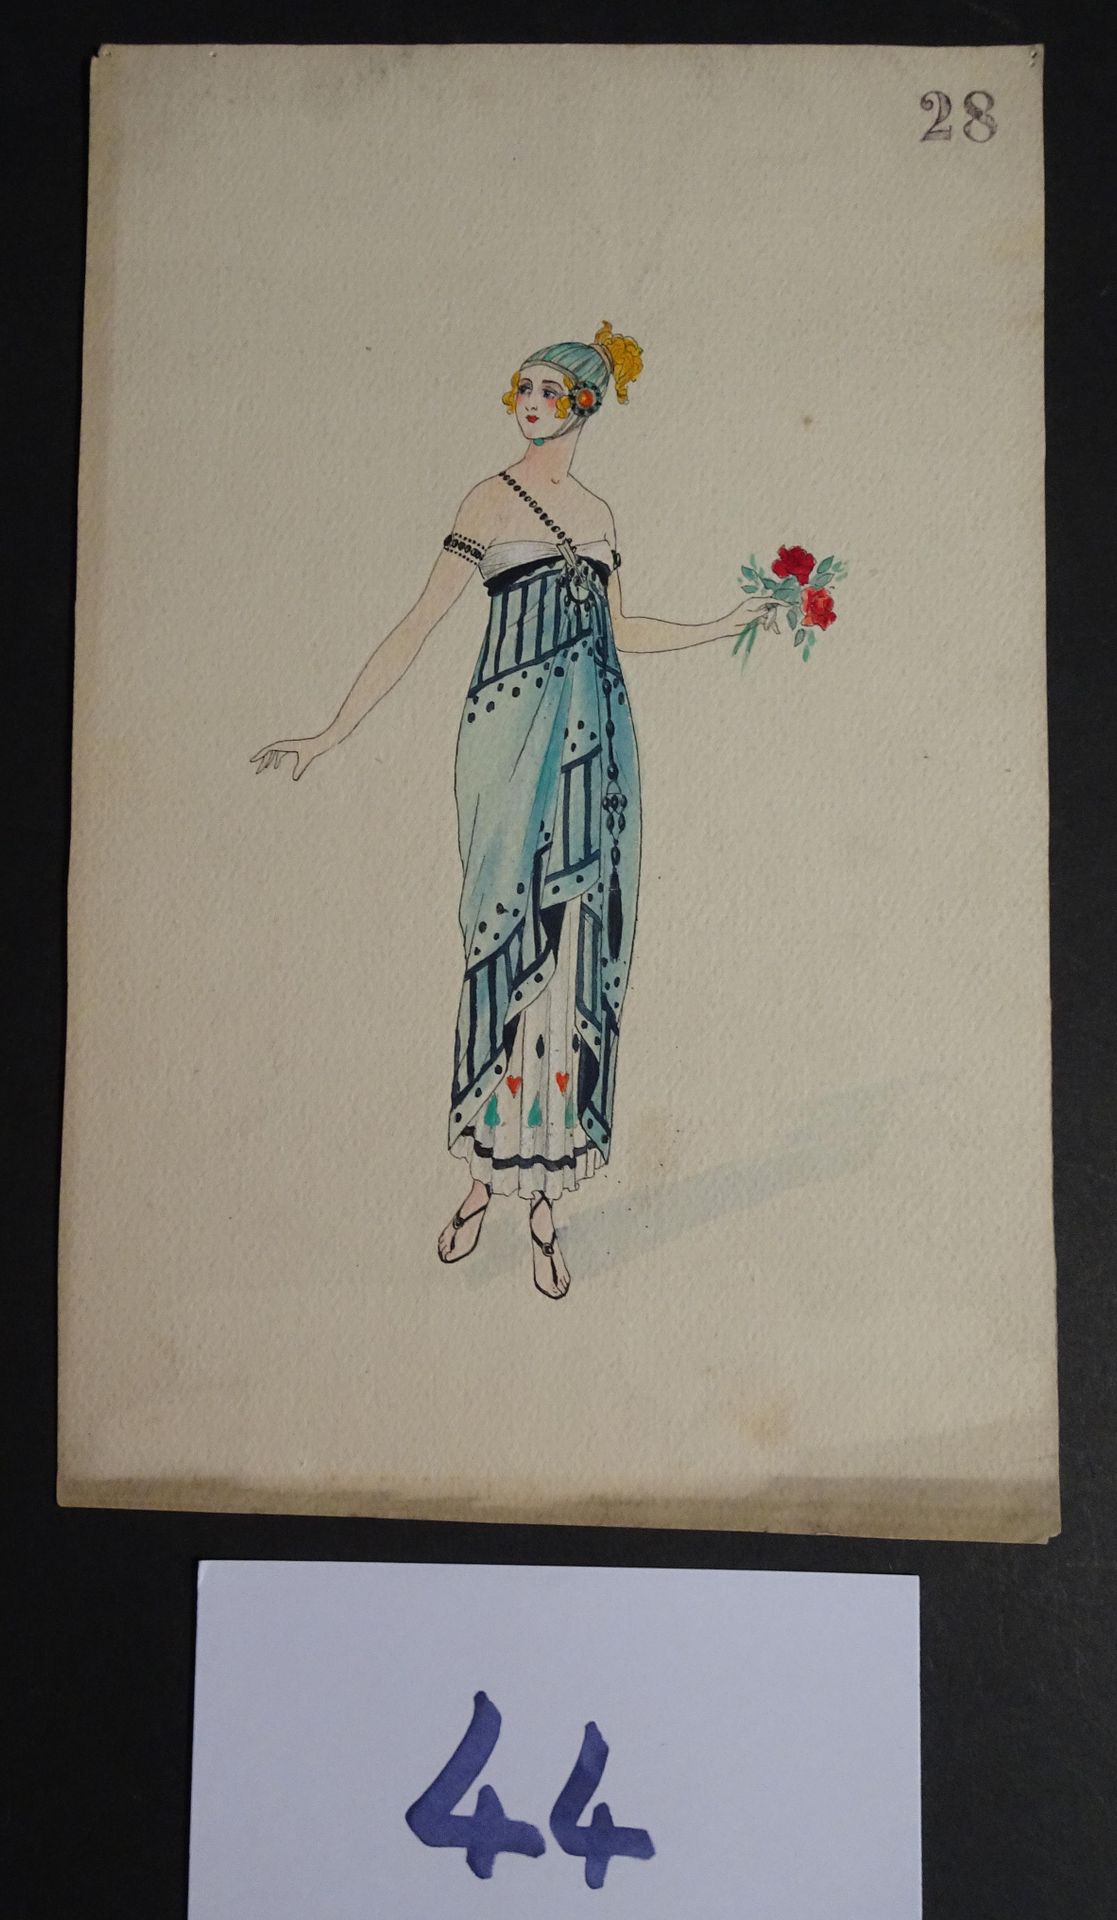 SOKOLOFF 索科洛夫-伊戈尔（10世纪初

"拿着一束红花的女人"。钢笔、墨水和水彩画。C. 1920年。27 x 18厘米。